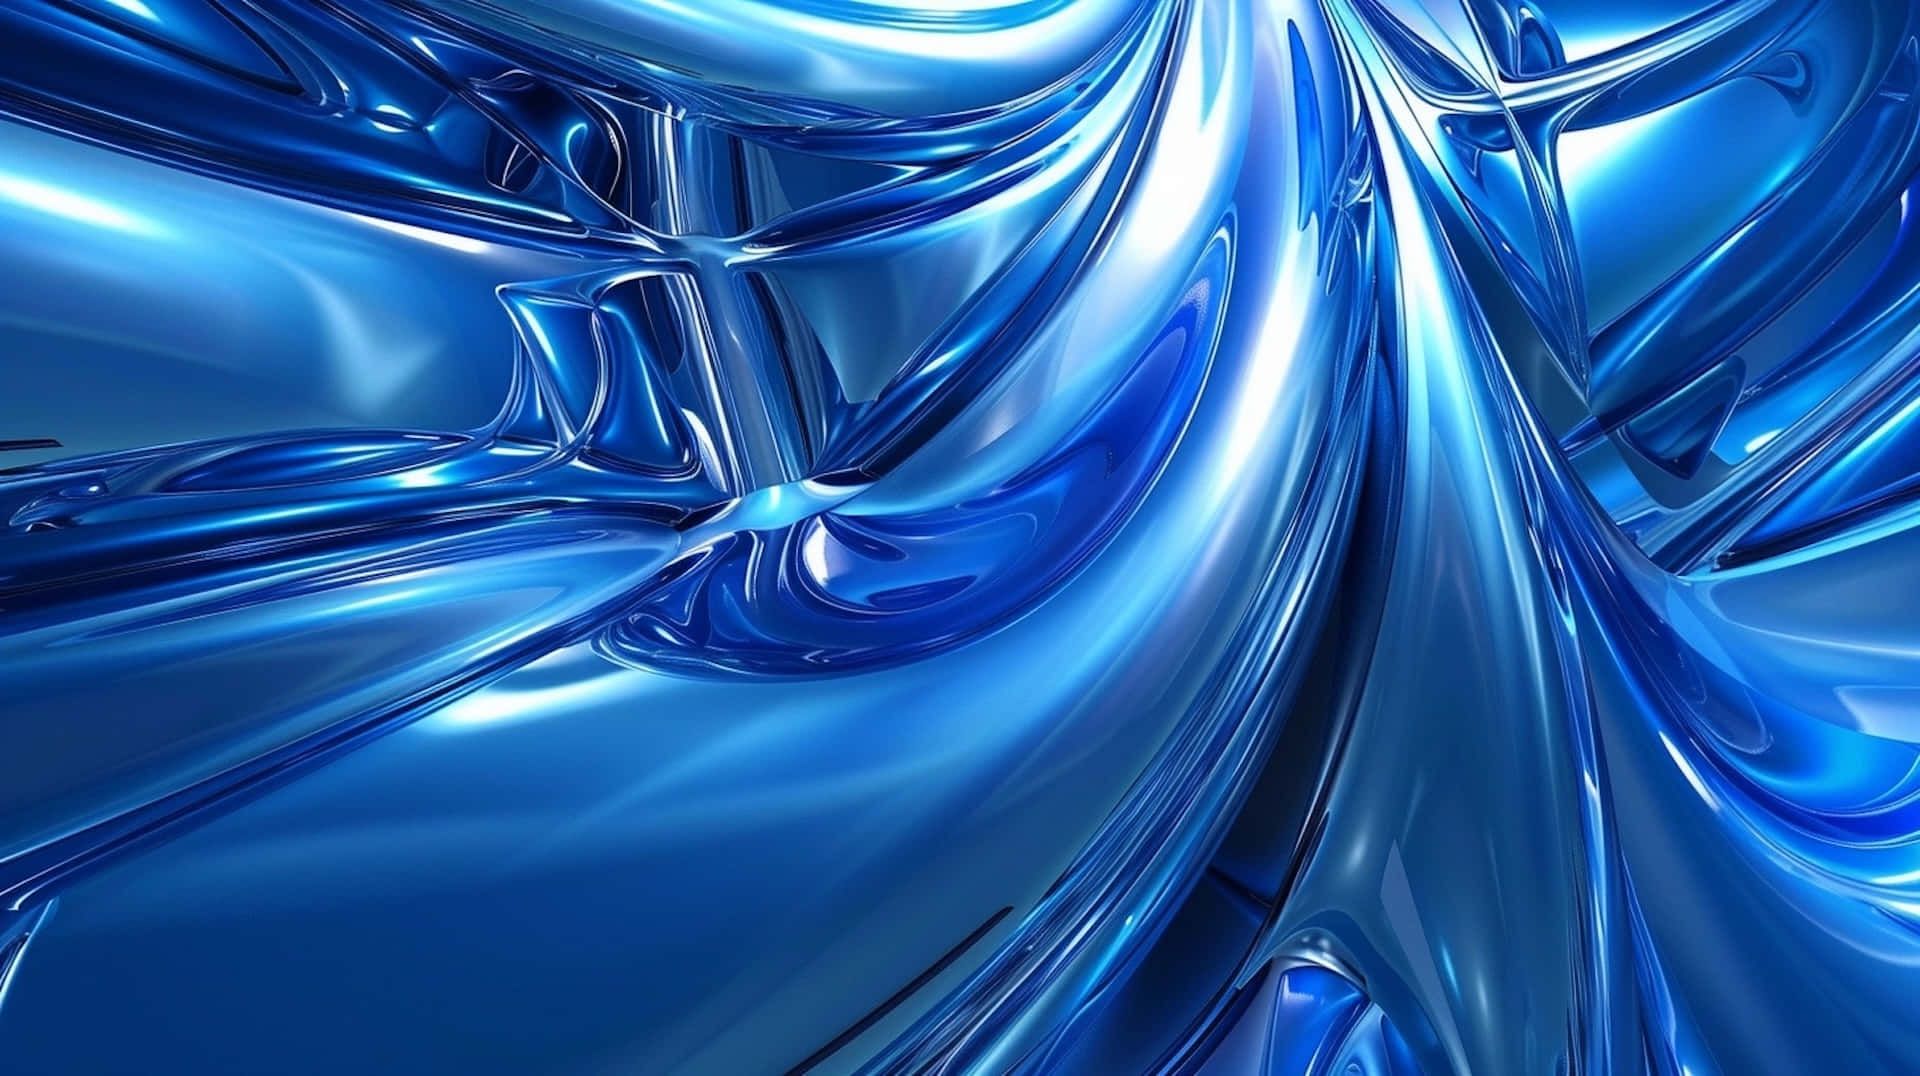 Abstract Blue Liquid Art Wallpaper